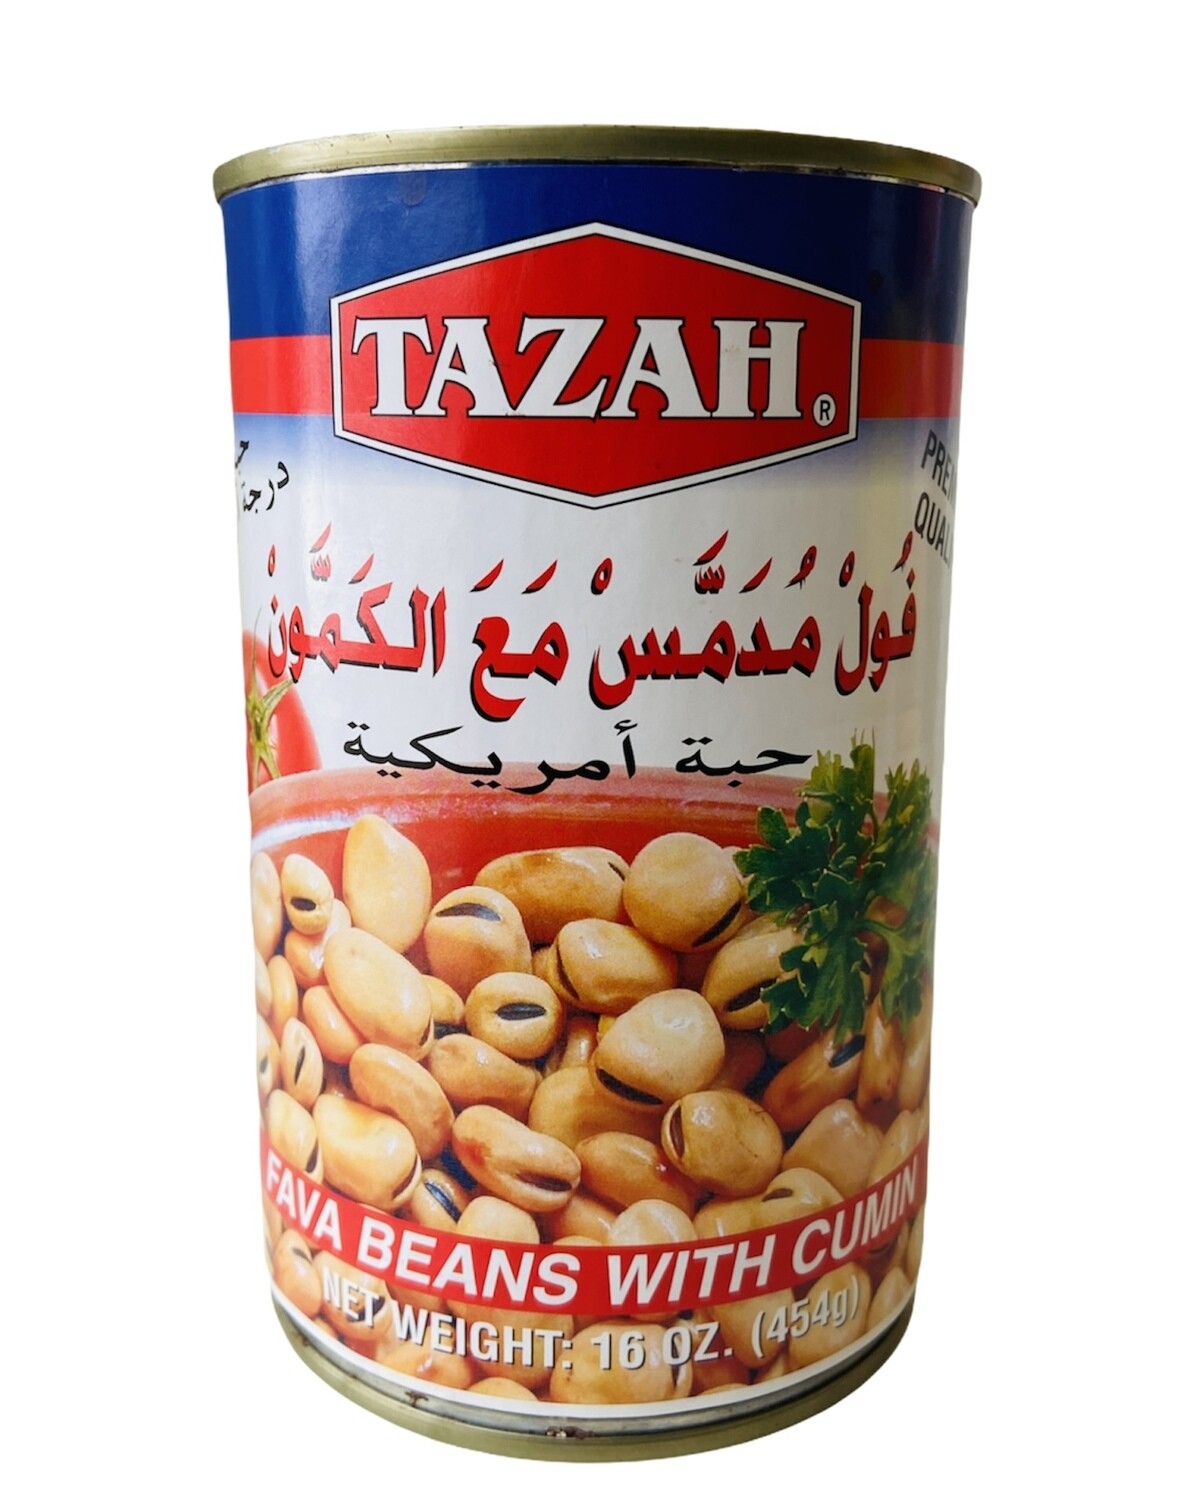 Tazah Fava Beans With Cumin 24x16oz